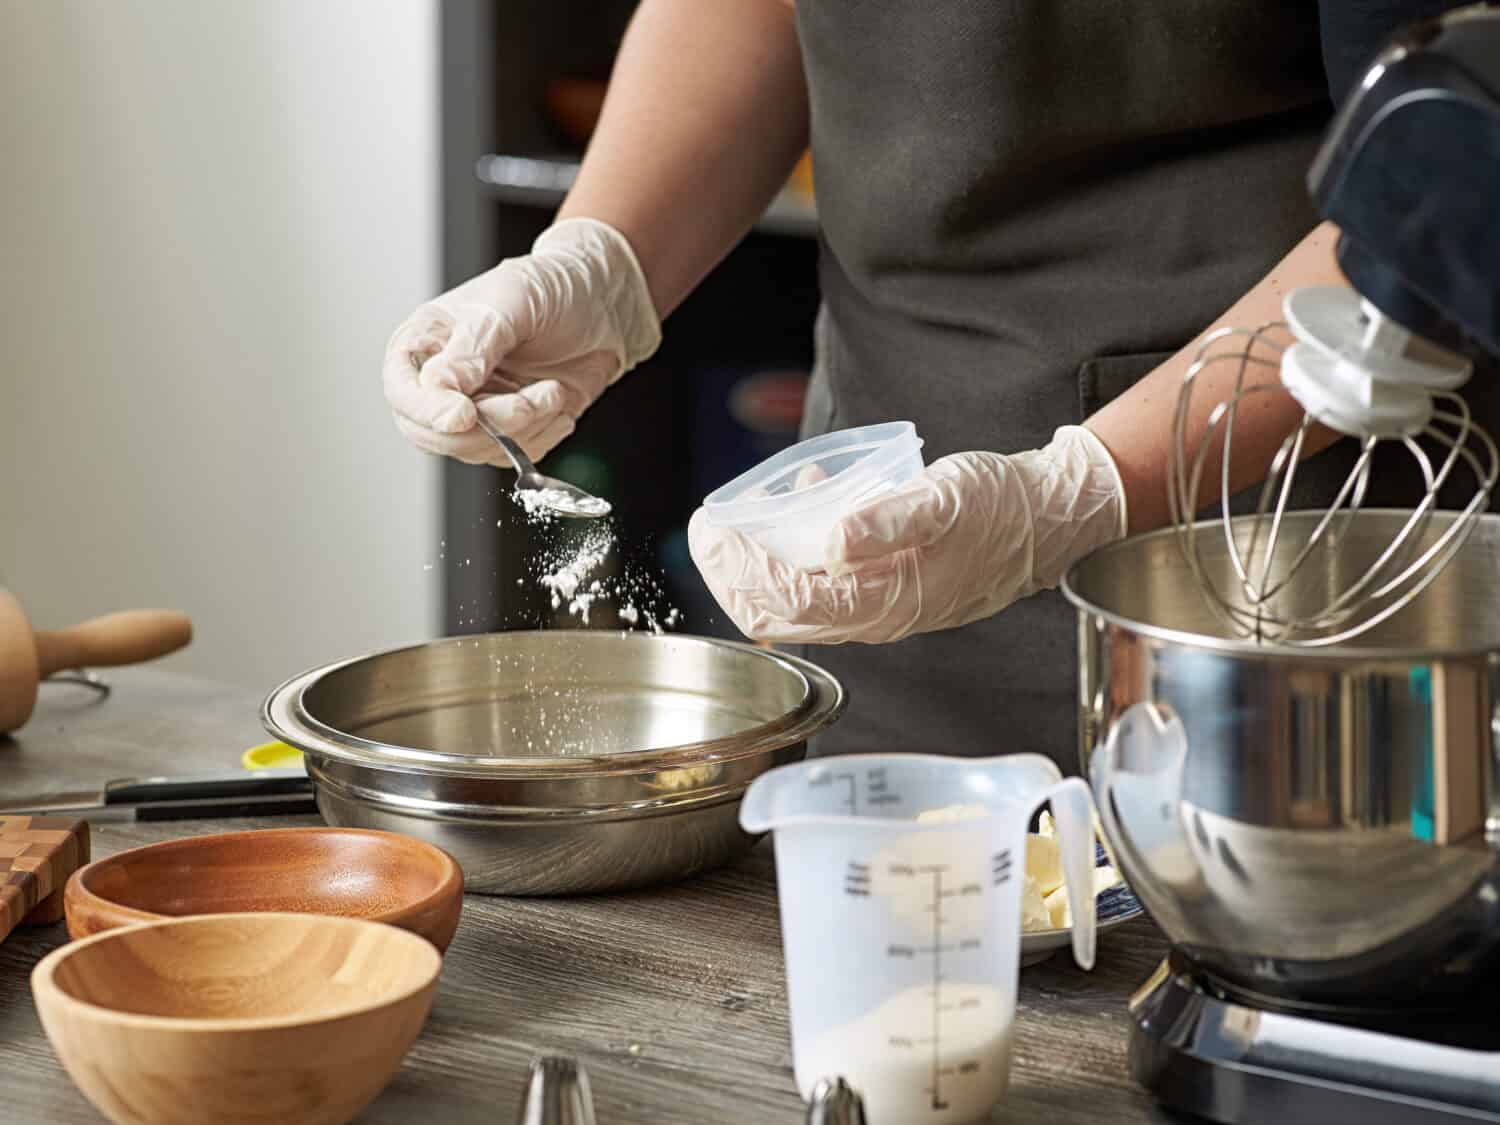 A closeup of a pastry chef adding flour or baking powder to a mixer bowl to make a dessert dough.